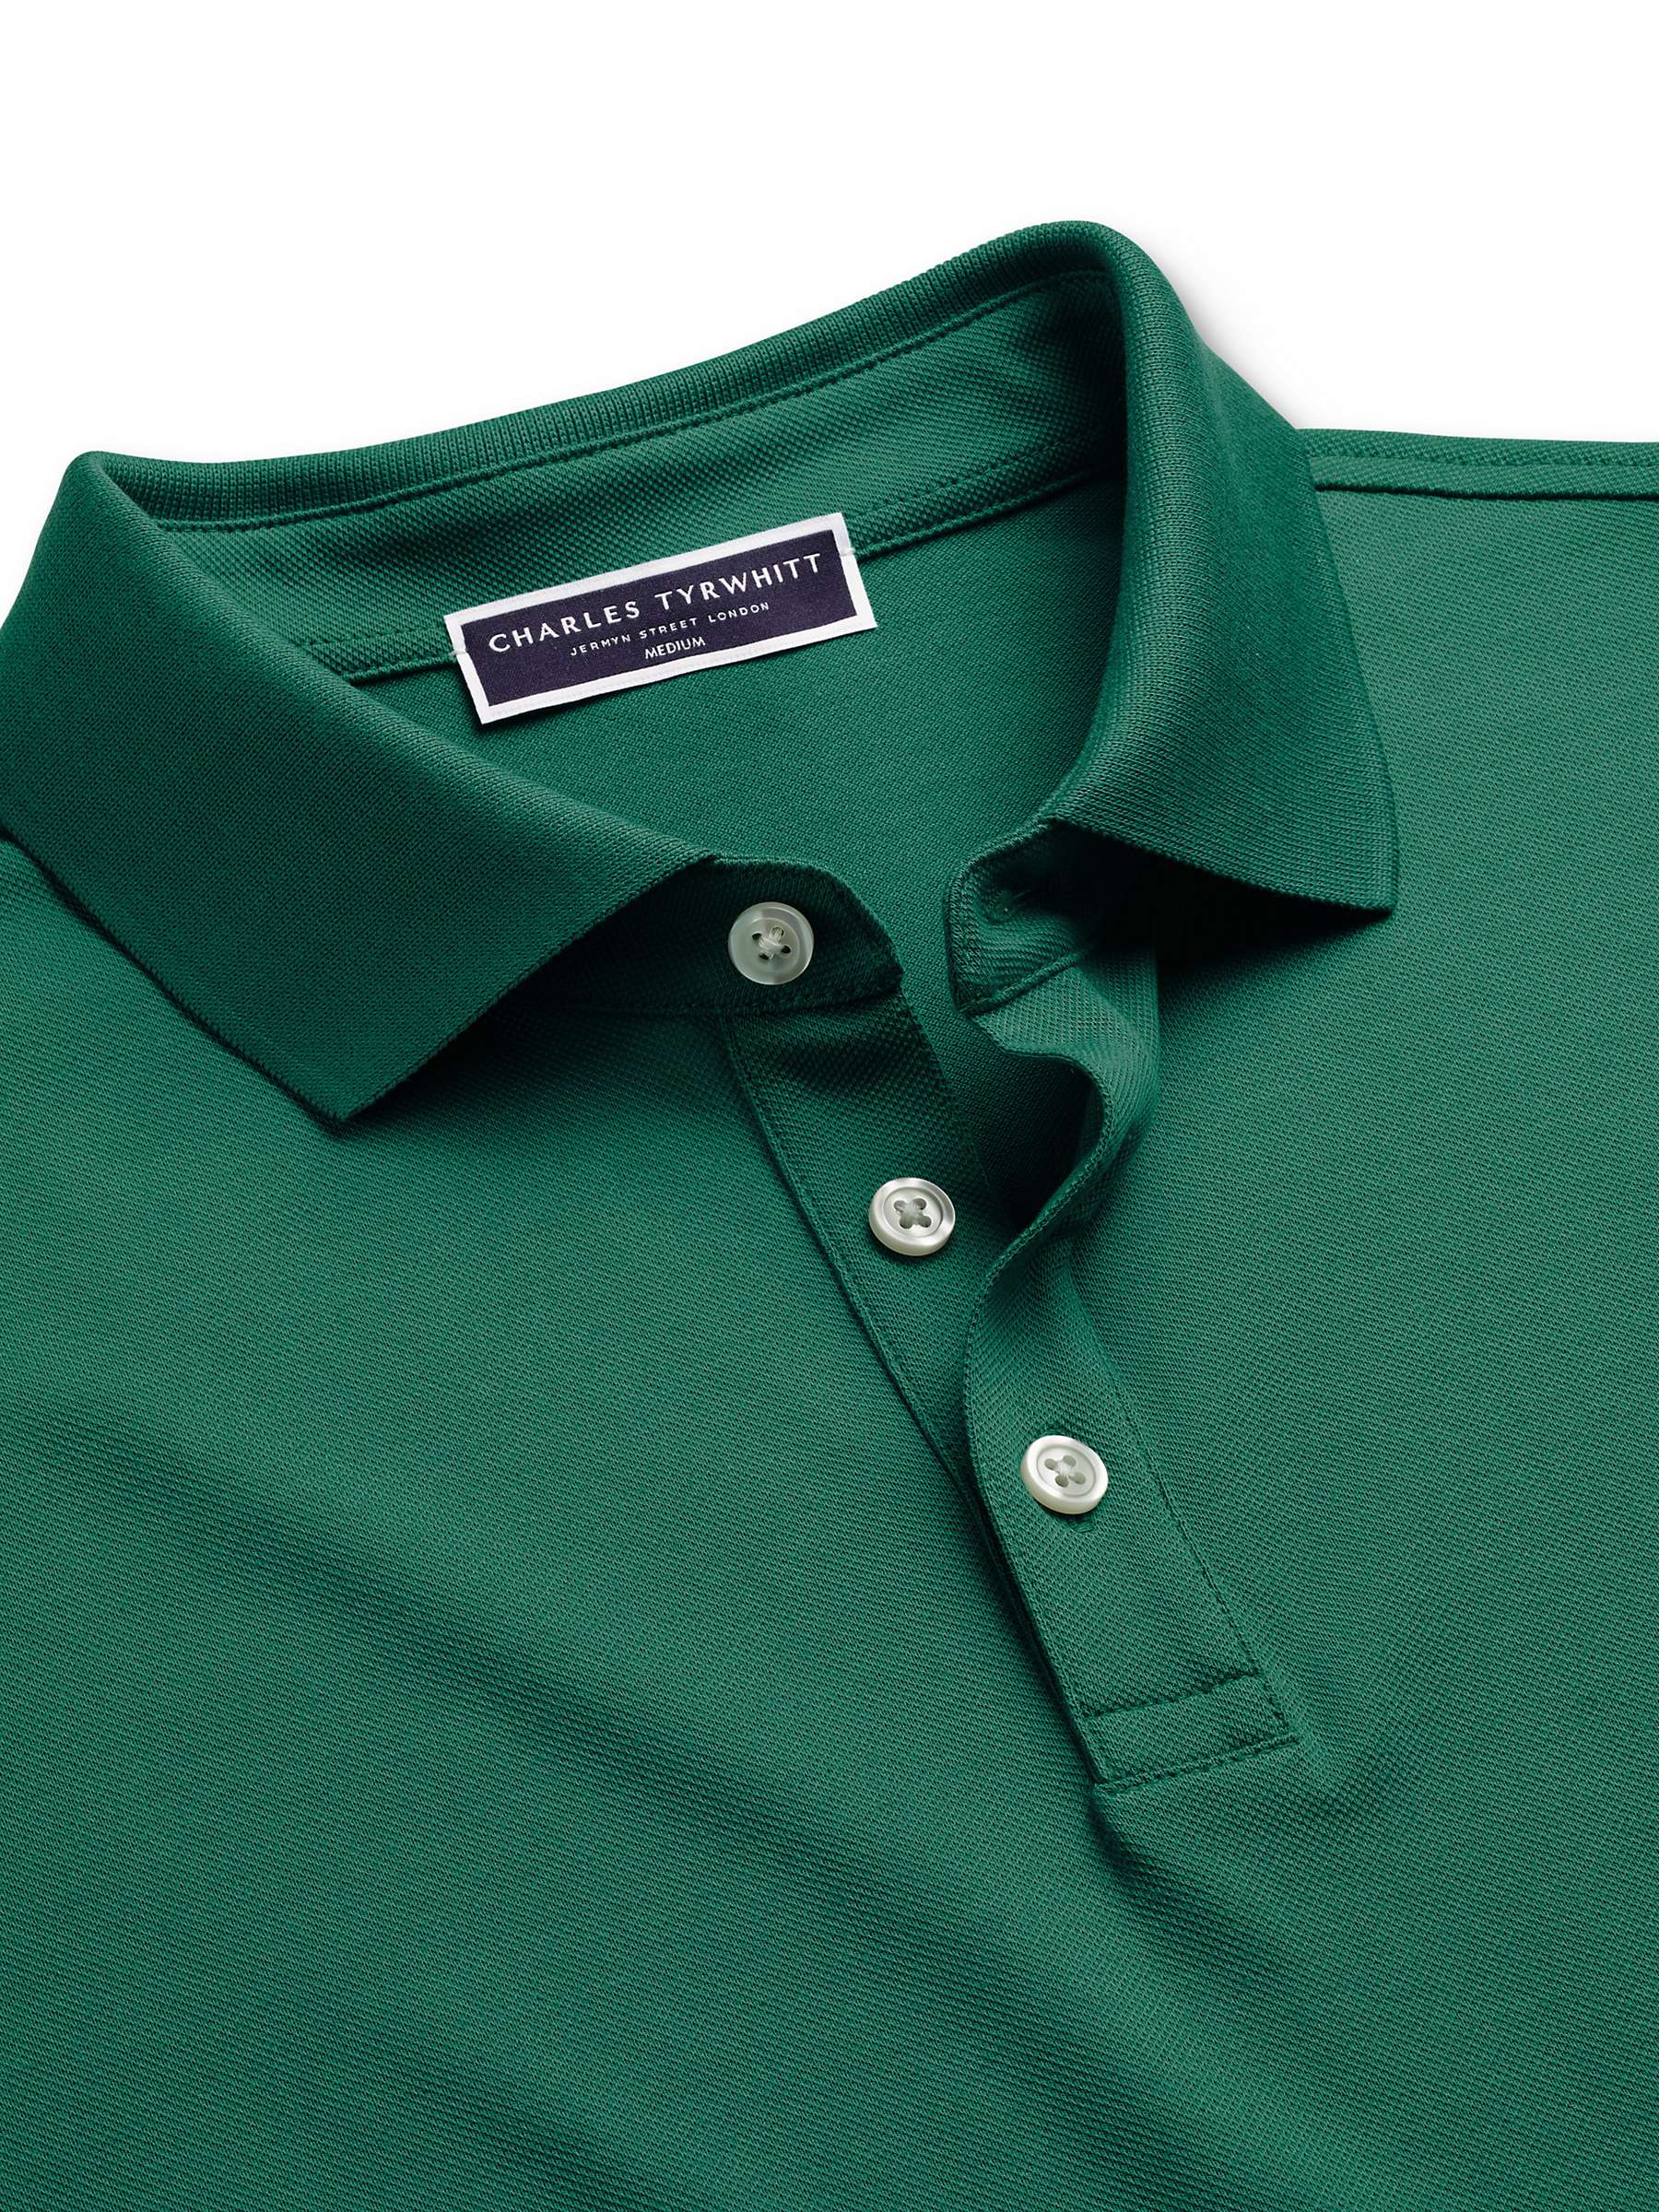 Buy Charles Tyrwhitt Pique Cotton Polo Shirt Online at johnlewis.com